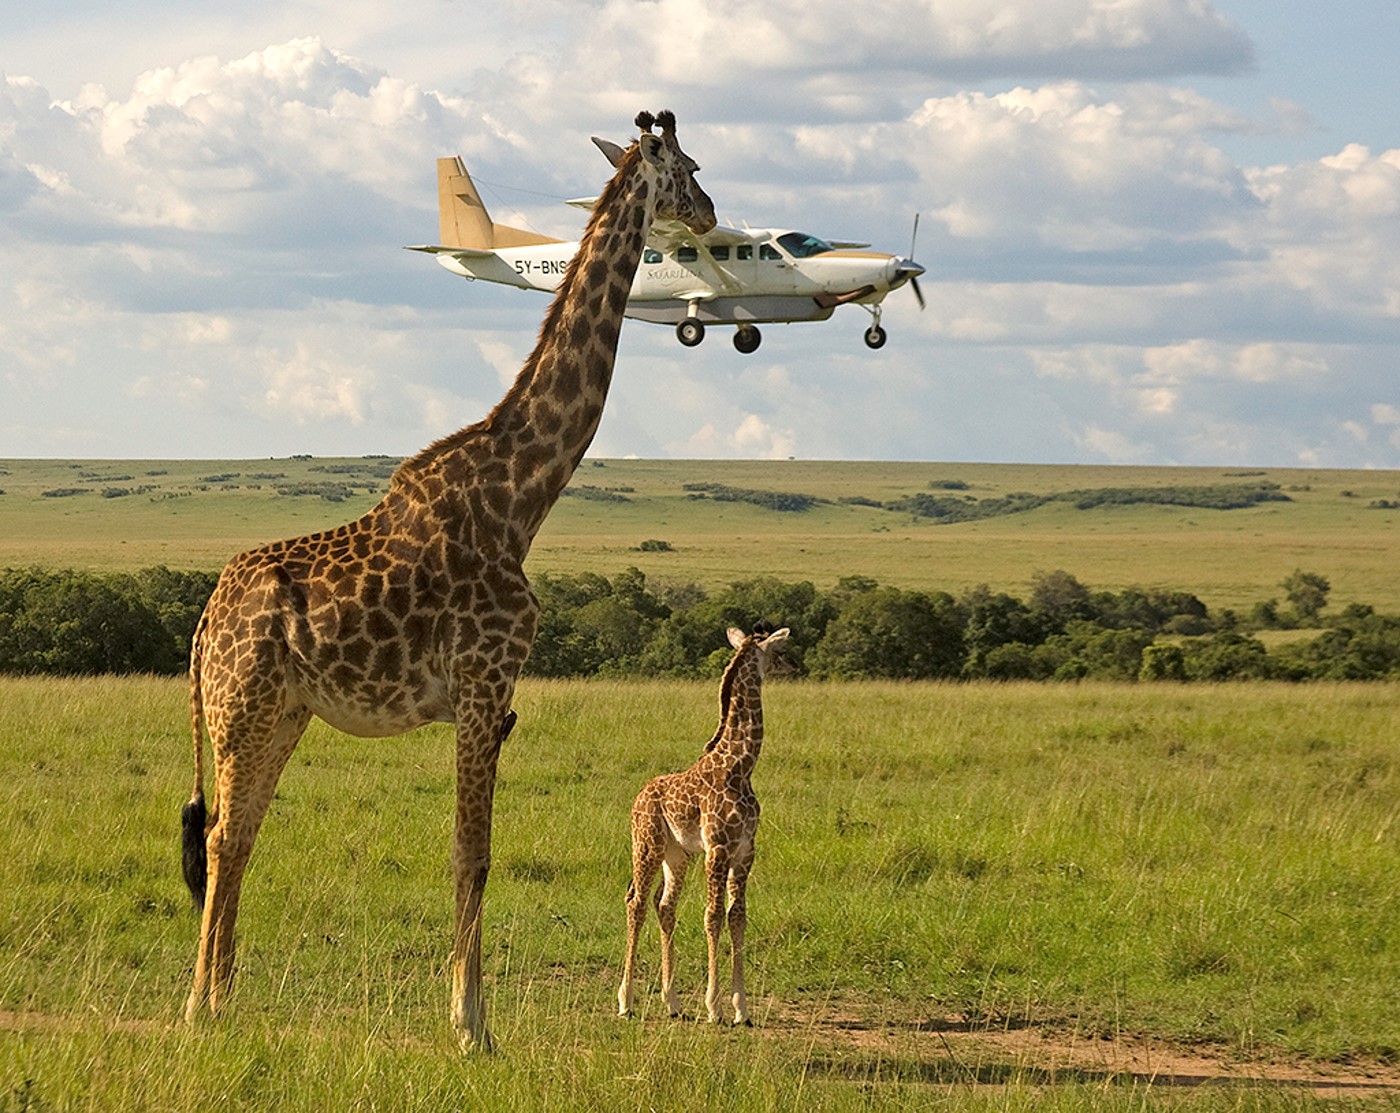 Giraffe and plane - GW Mara